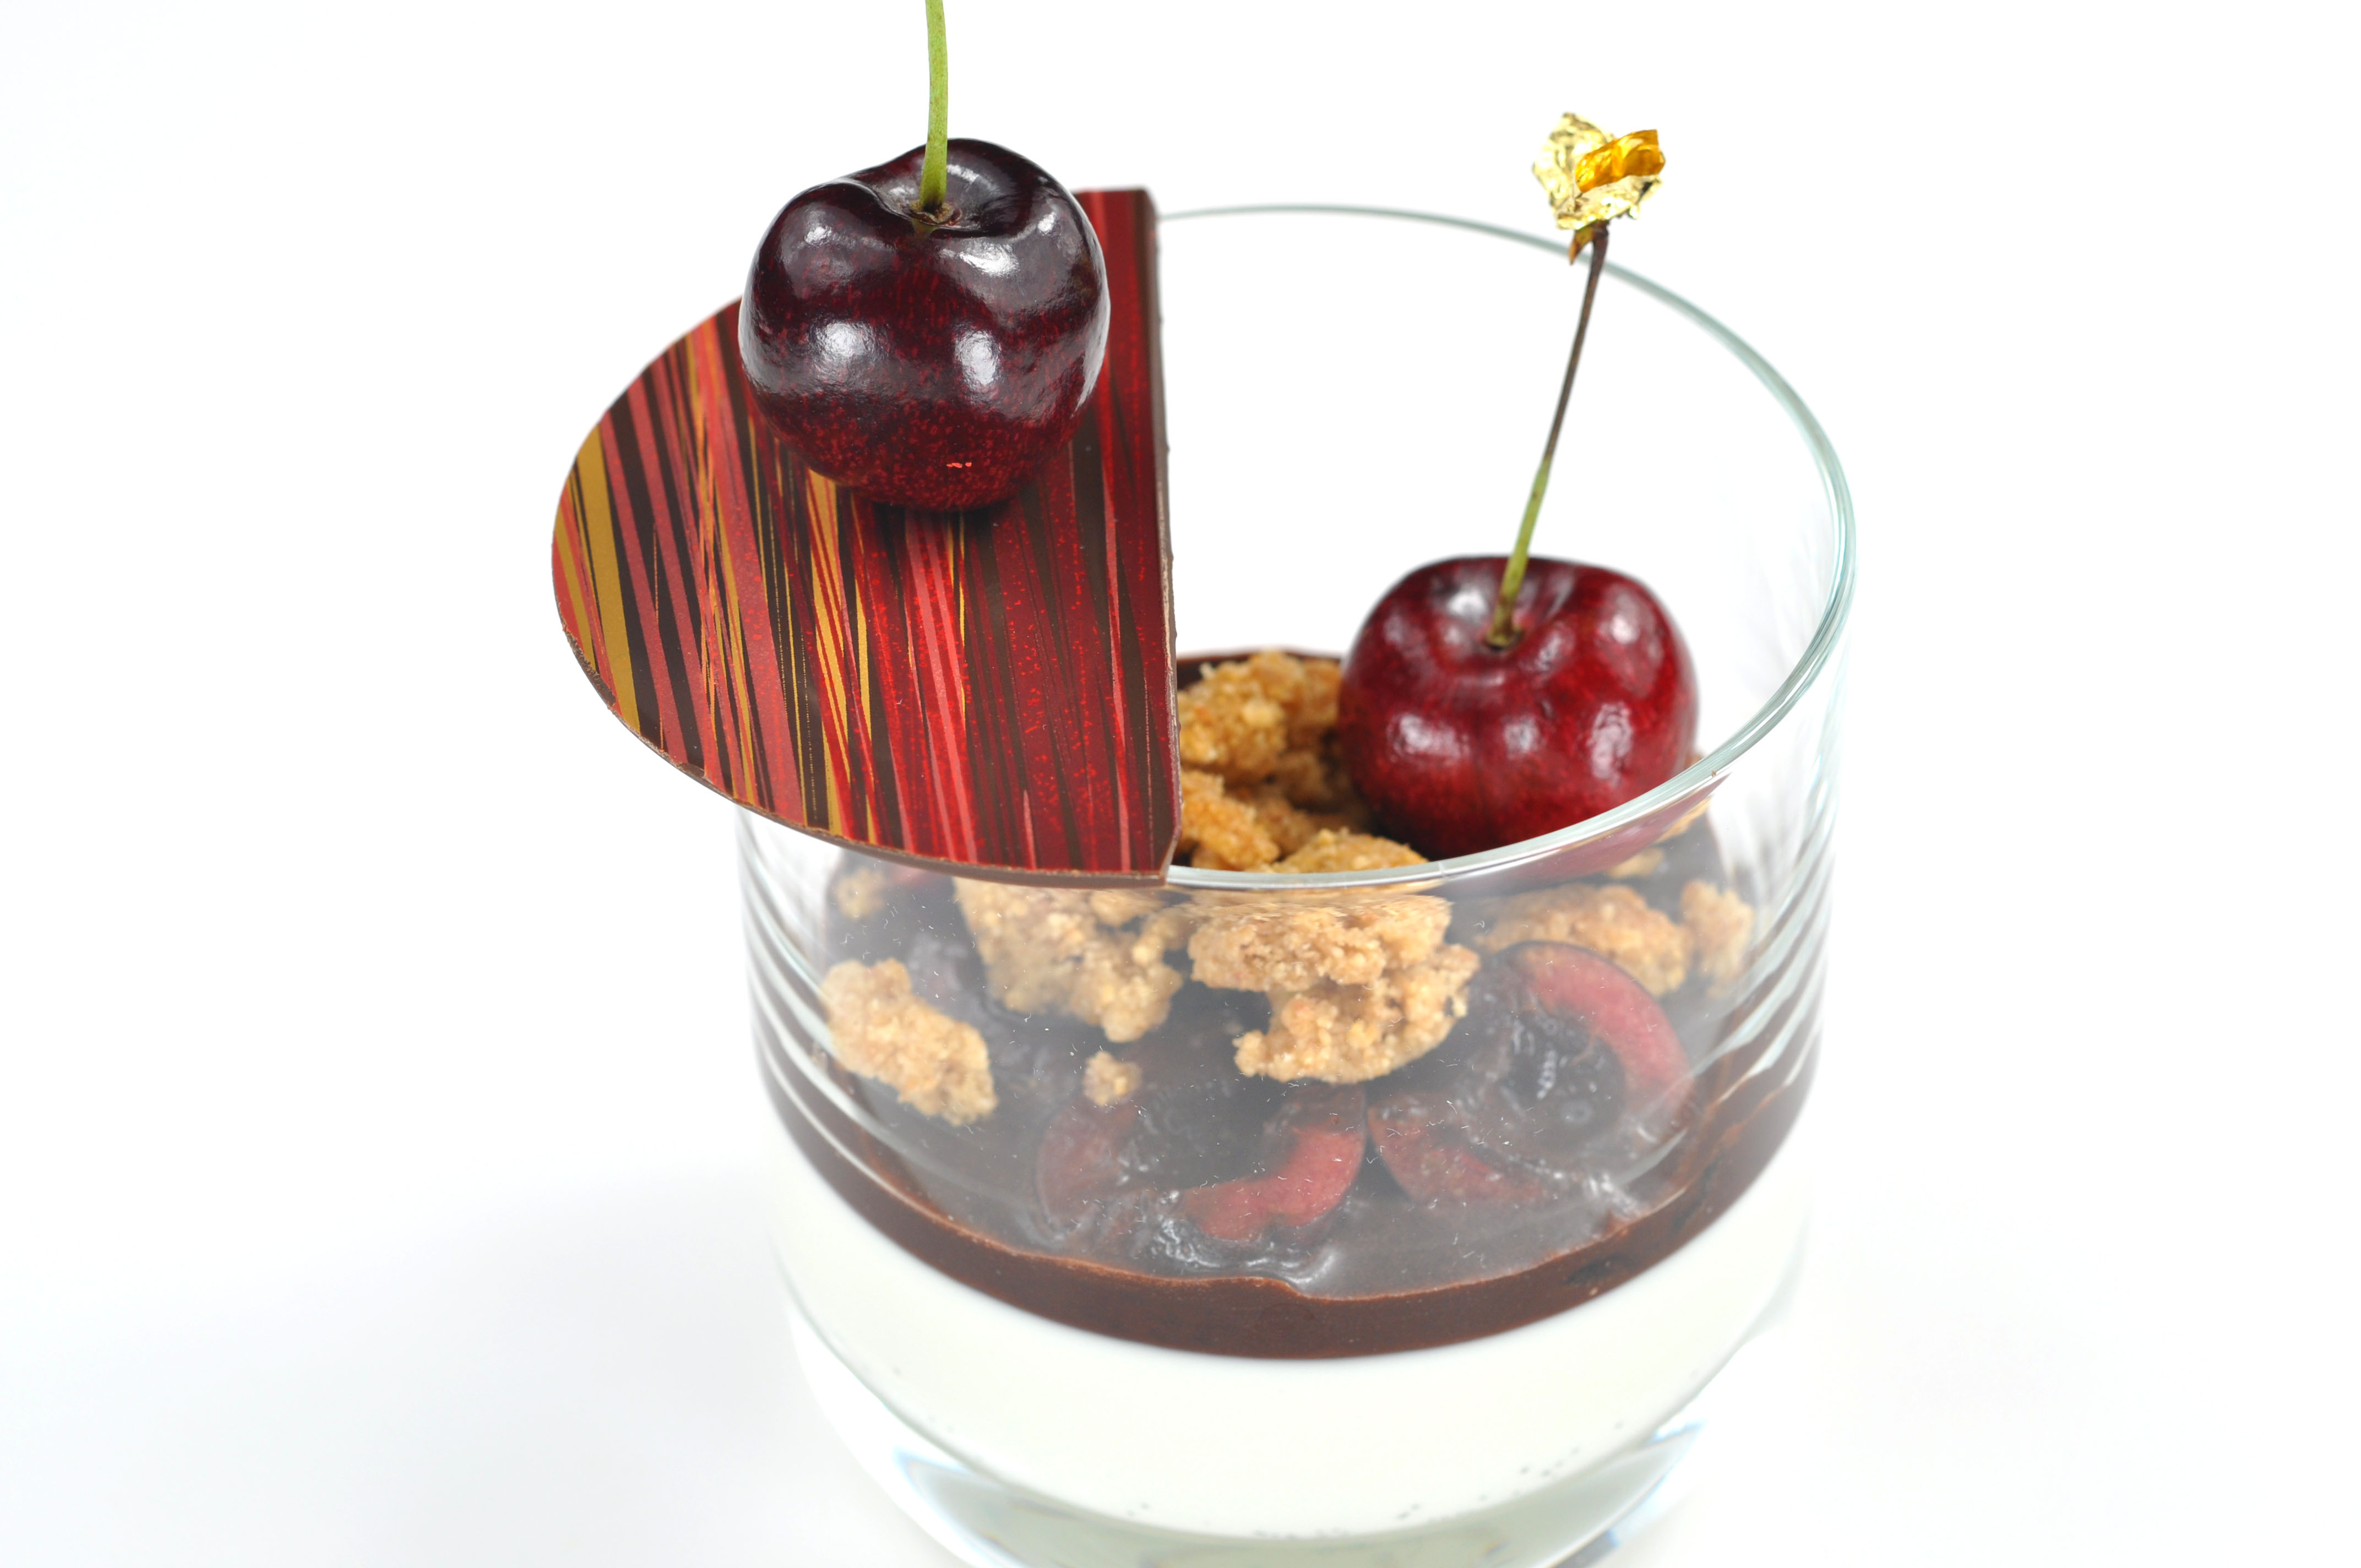 Chocolate Hazelnut Dessert in a glass - PrettySweet